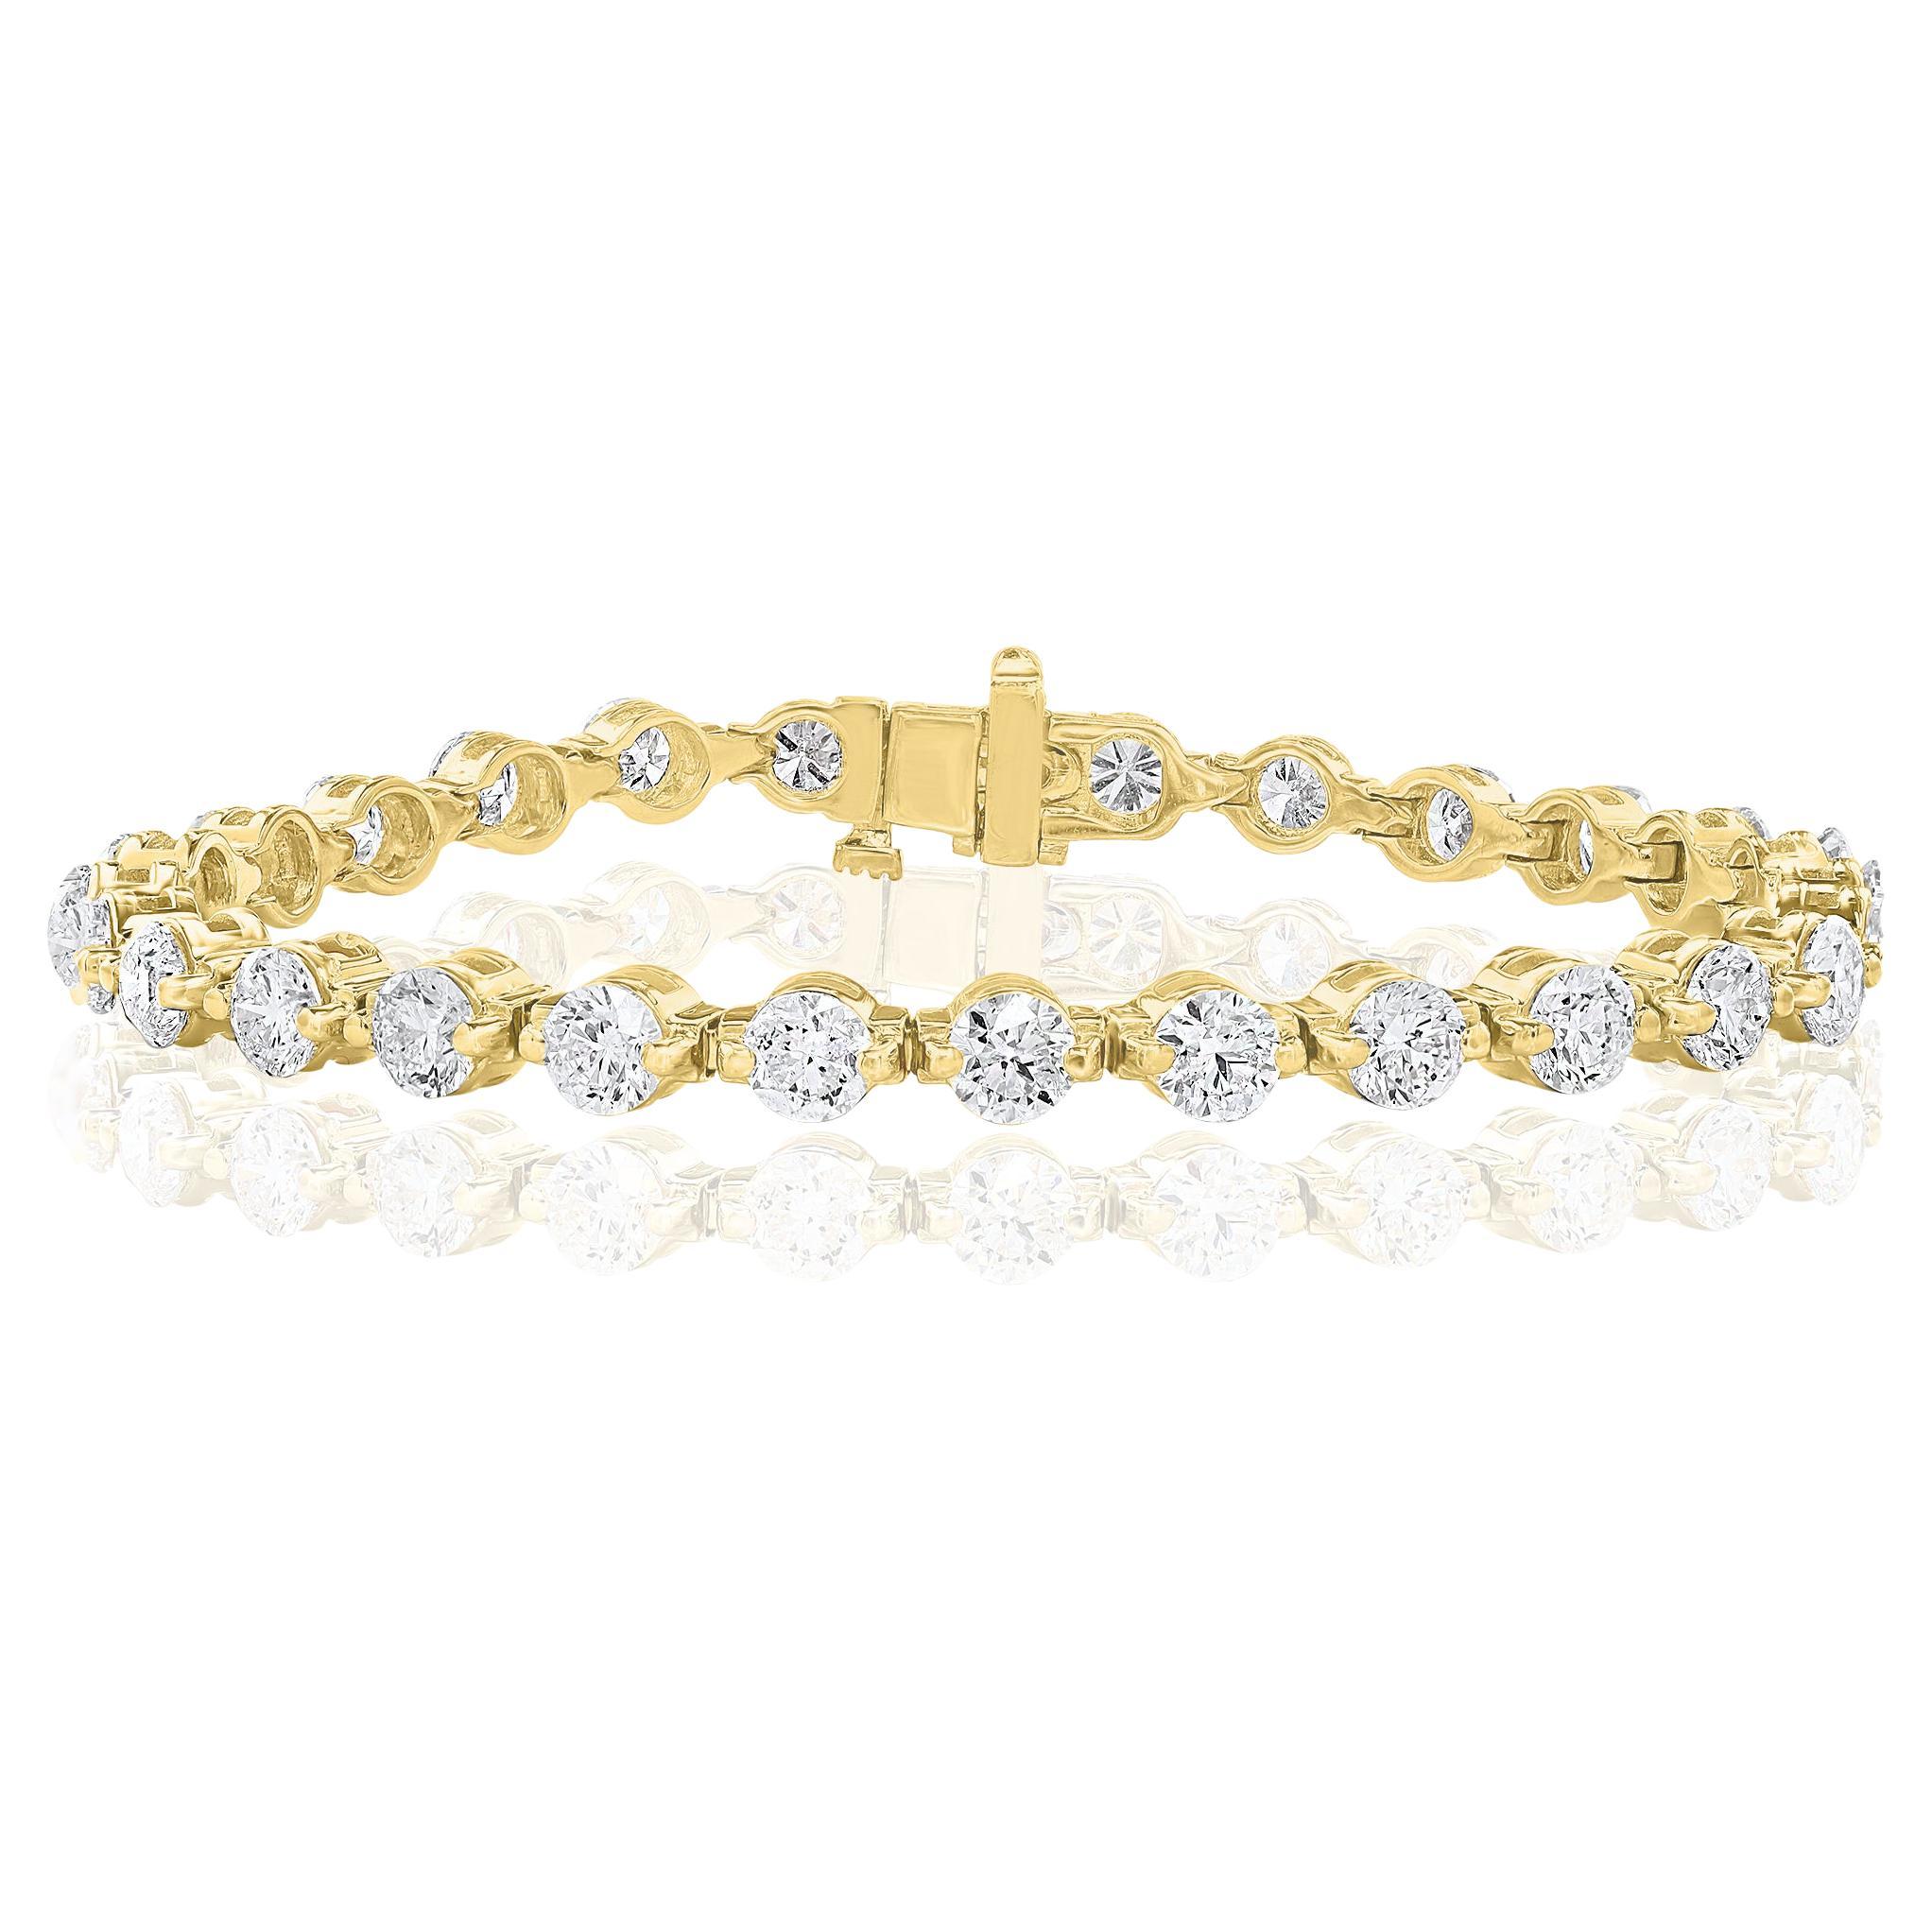 10.05 Carat Brilliant Cut Round Diamond Tennis Bracelet in 14K Yellow Gold For Sale